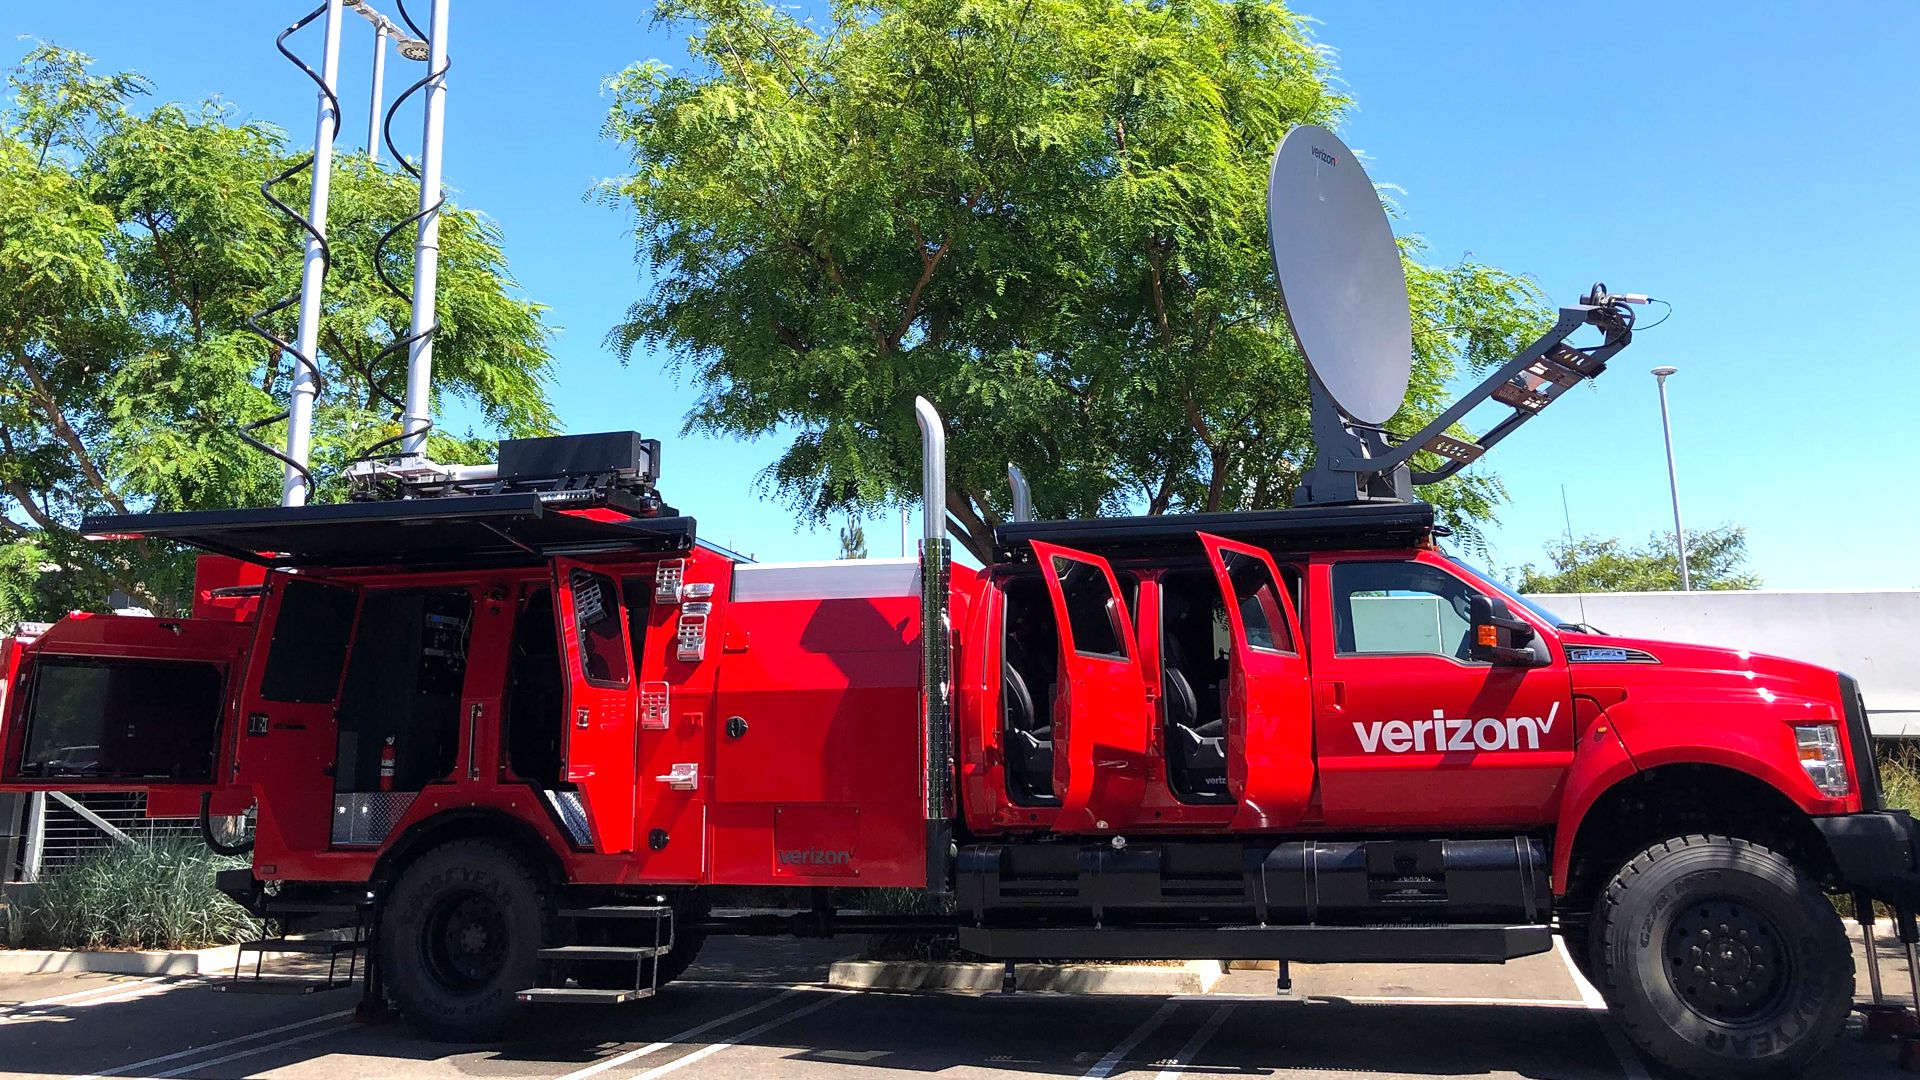 Image of Verizon's communication and disaster response prototype vehicle called THOR